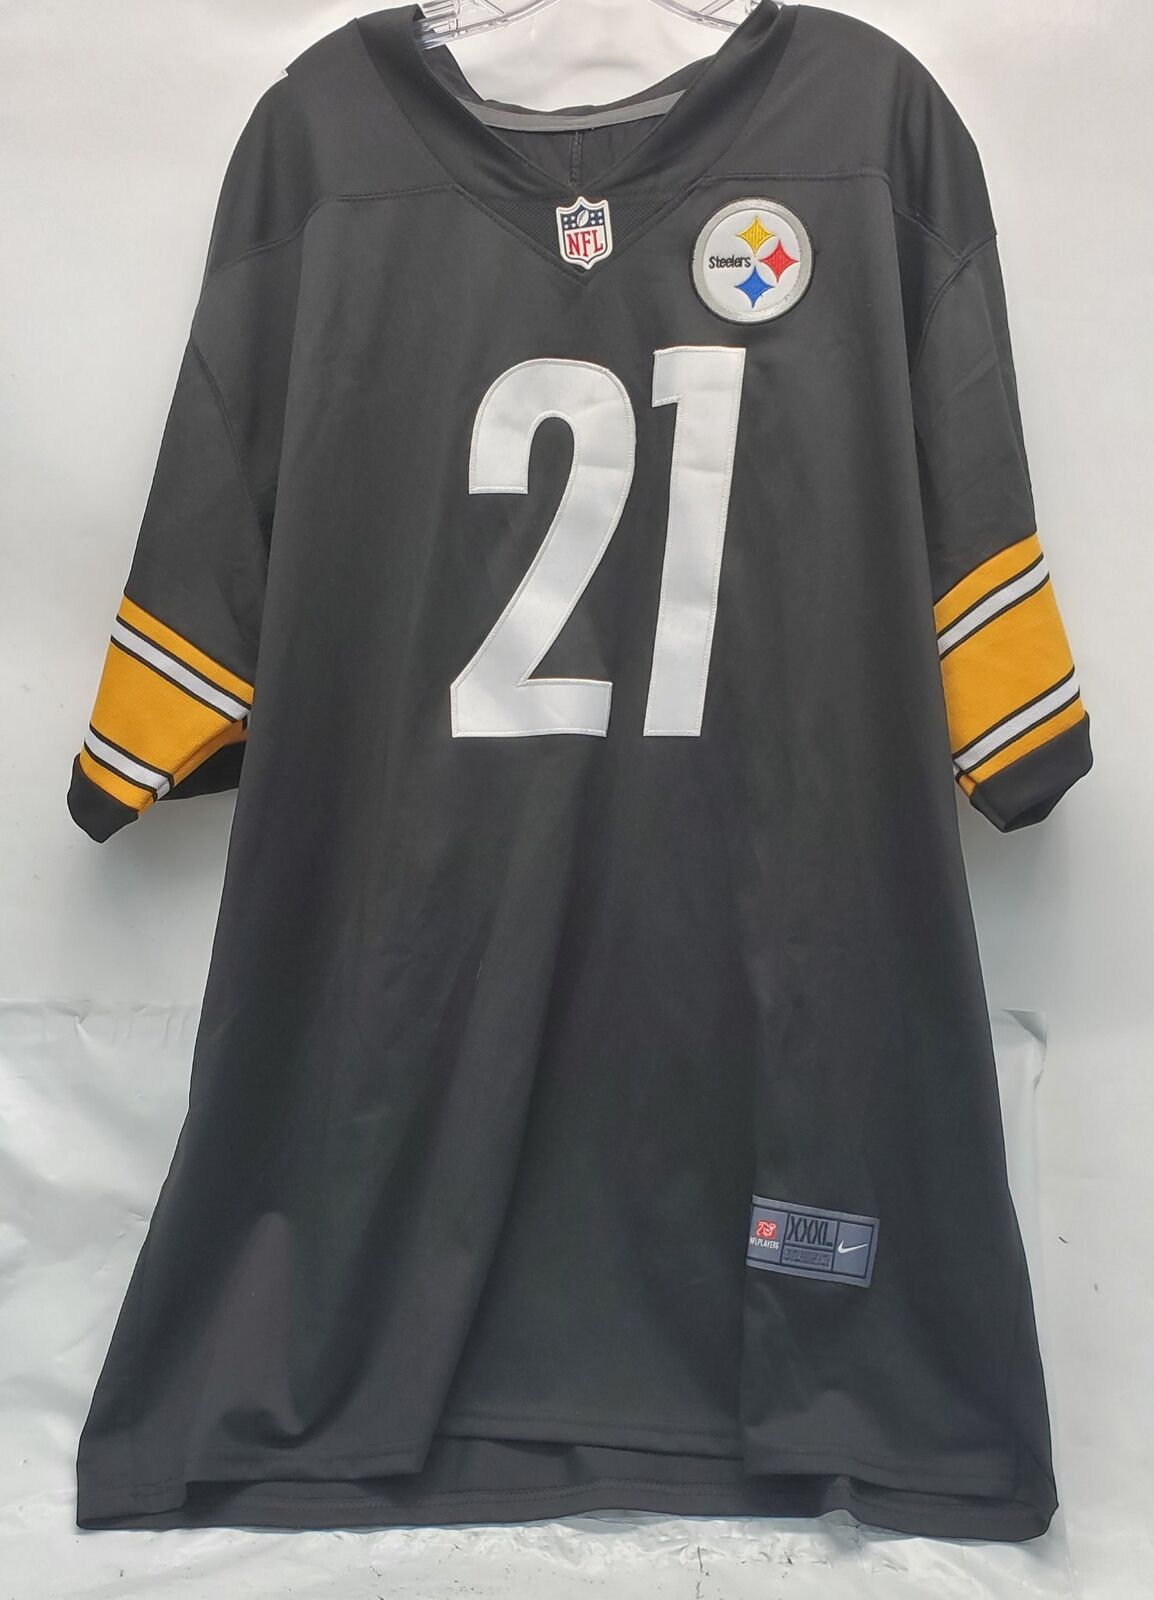 Nike NFL Pittsburgh Steelers #21 Haden Jersey Size XXXL